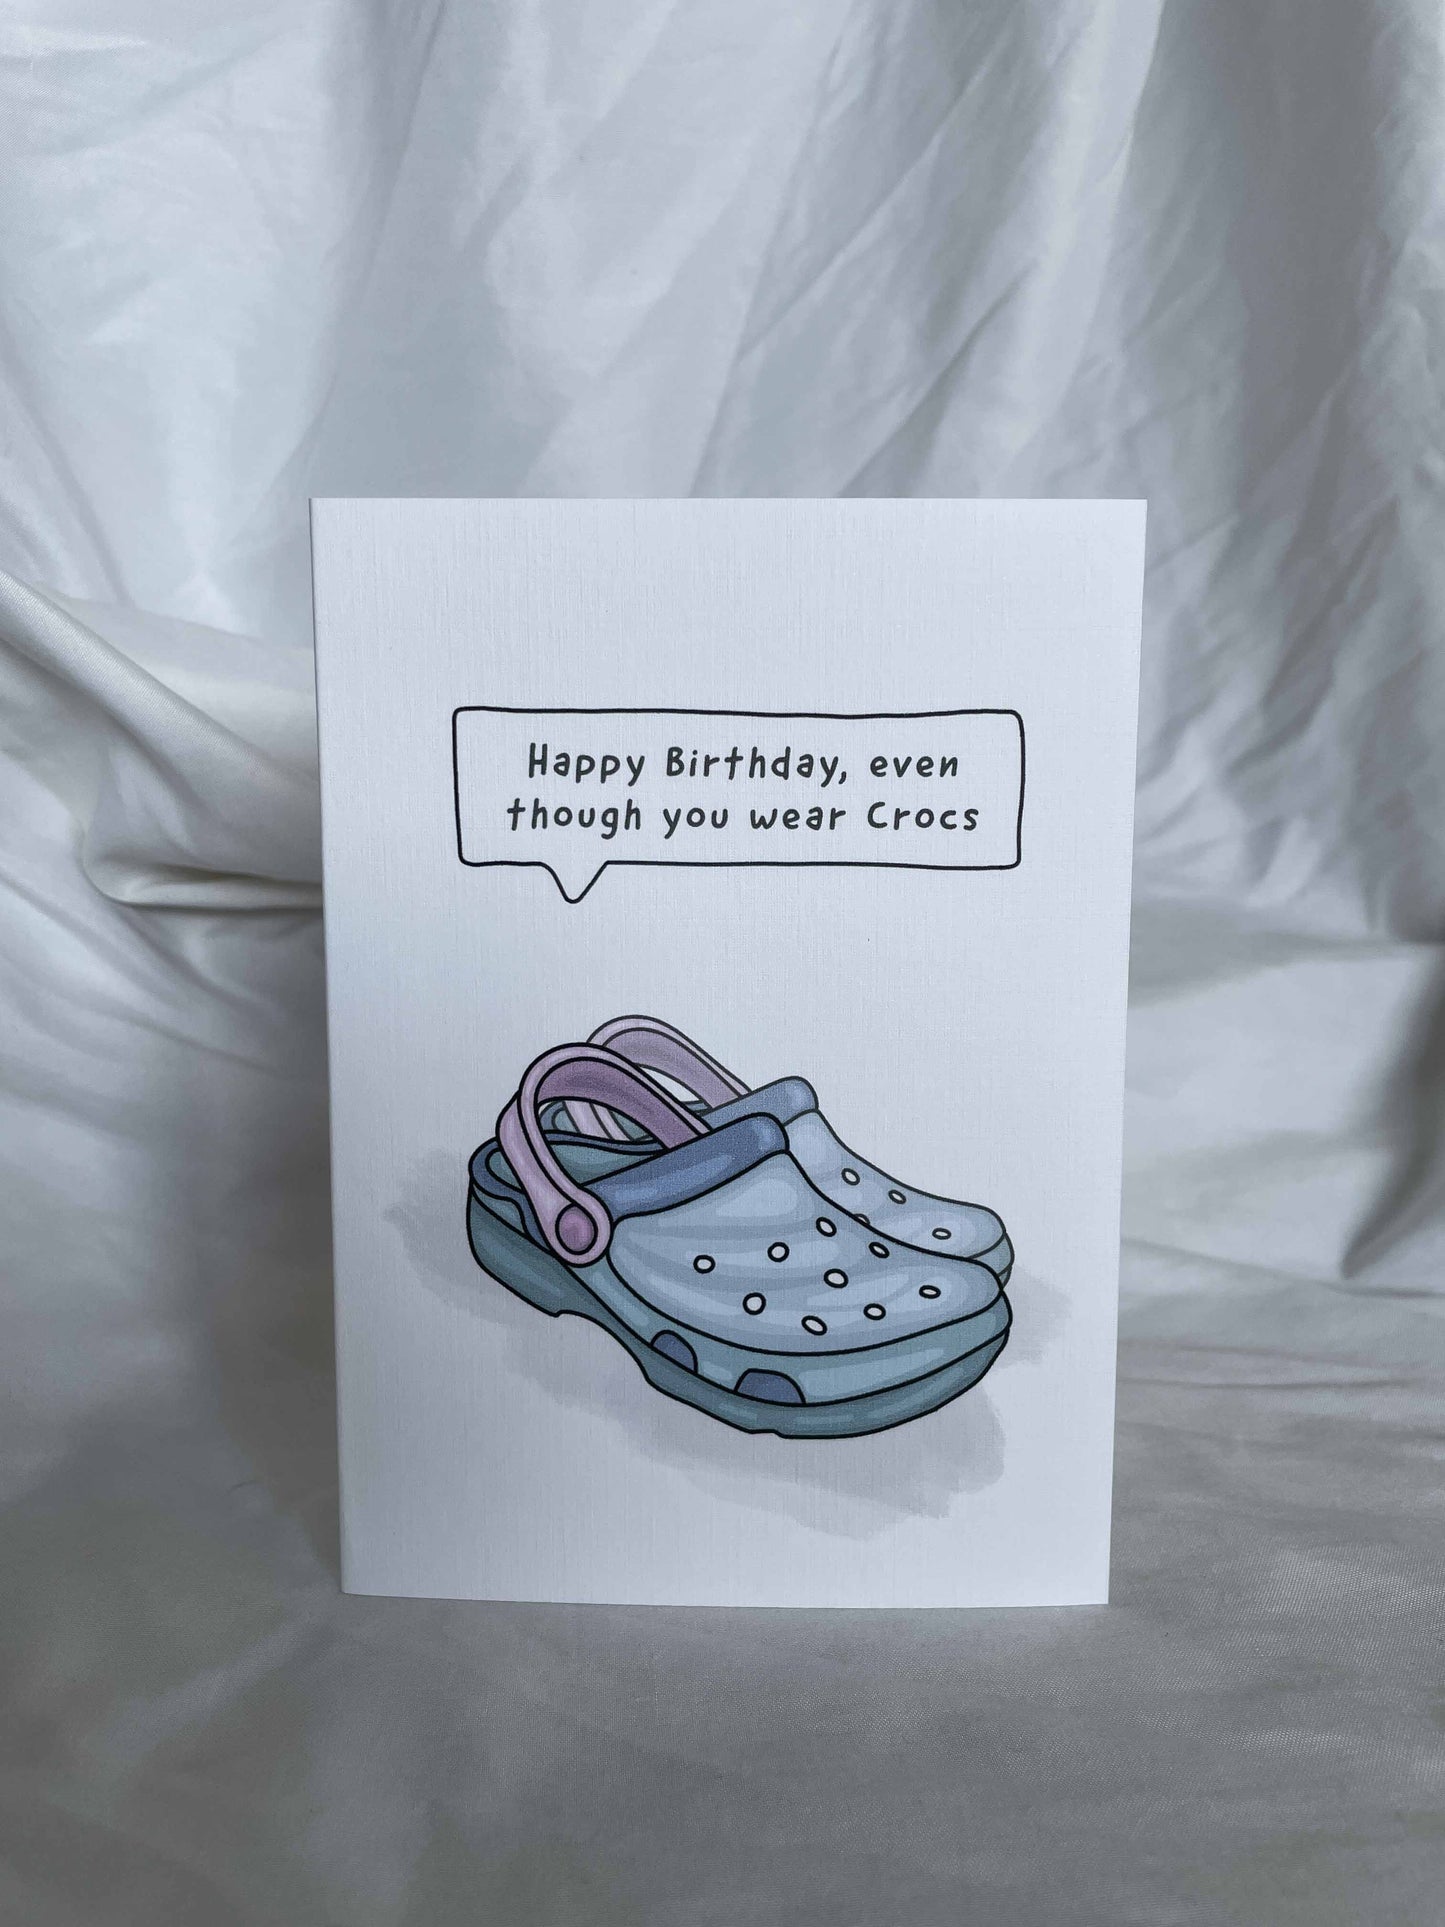 Happy Birthday, even though you wear Crocs